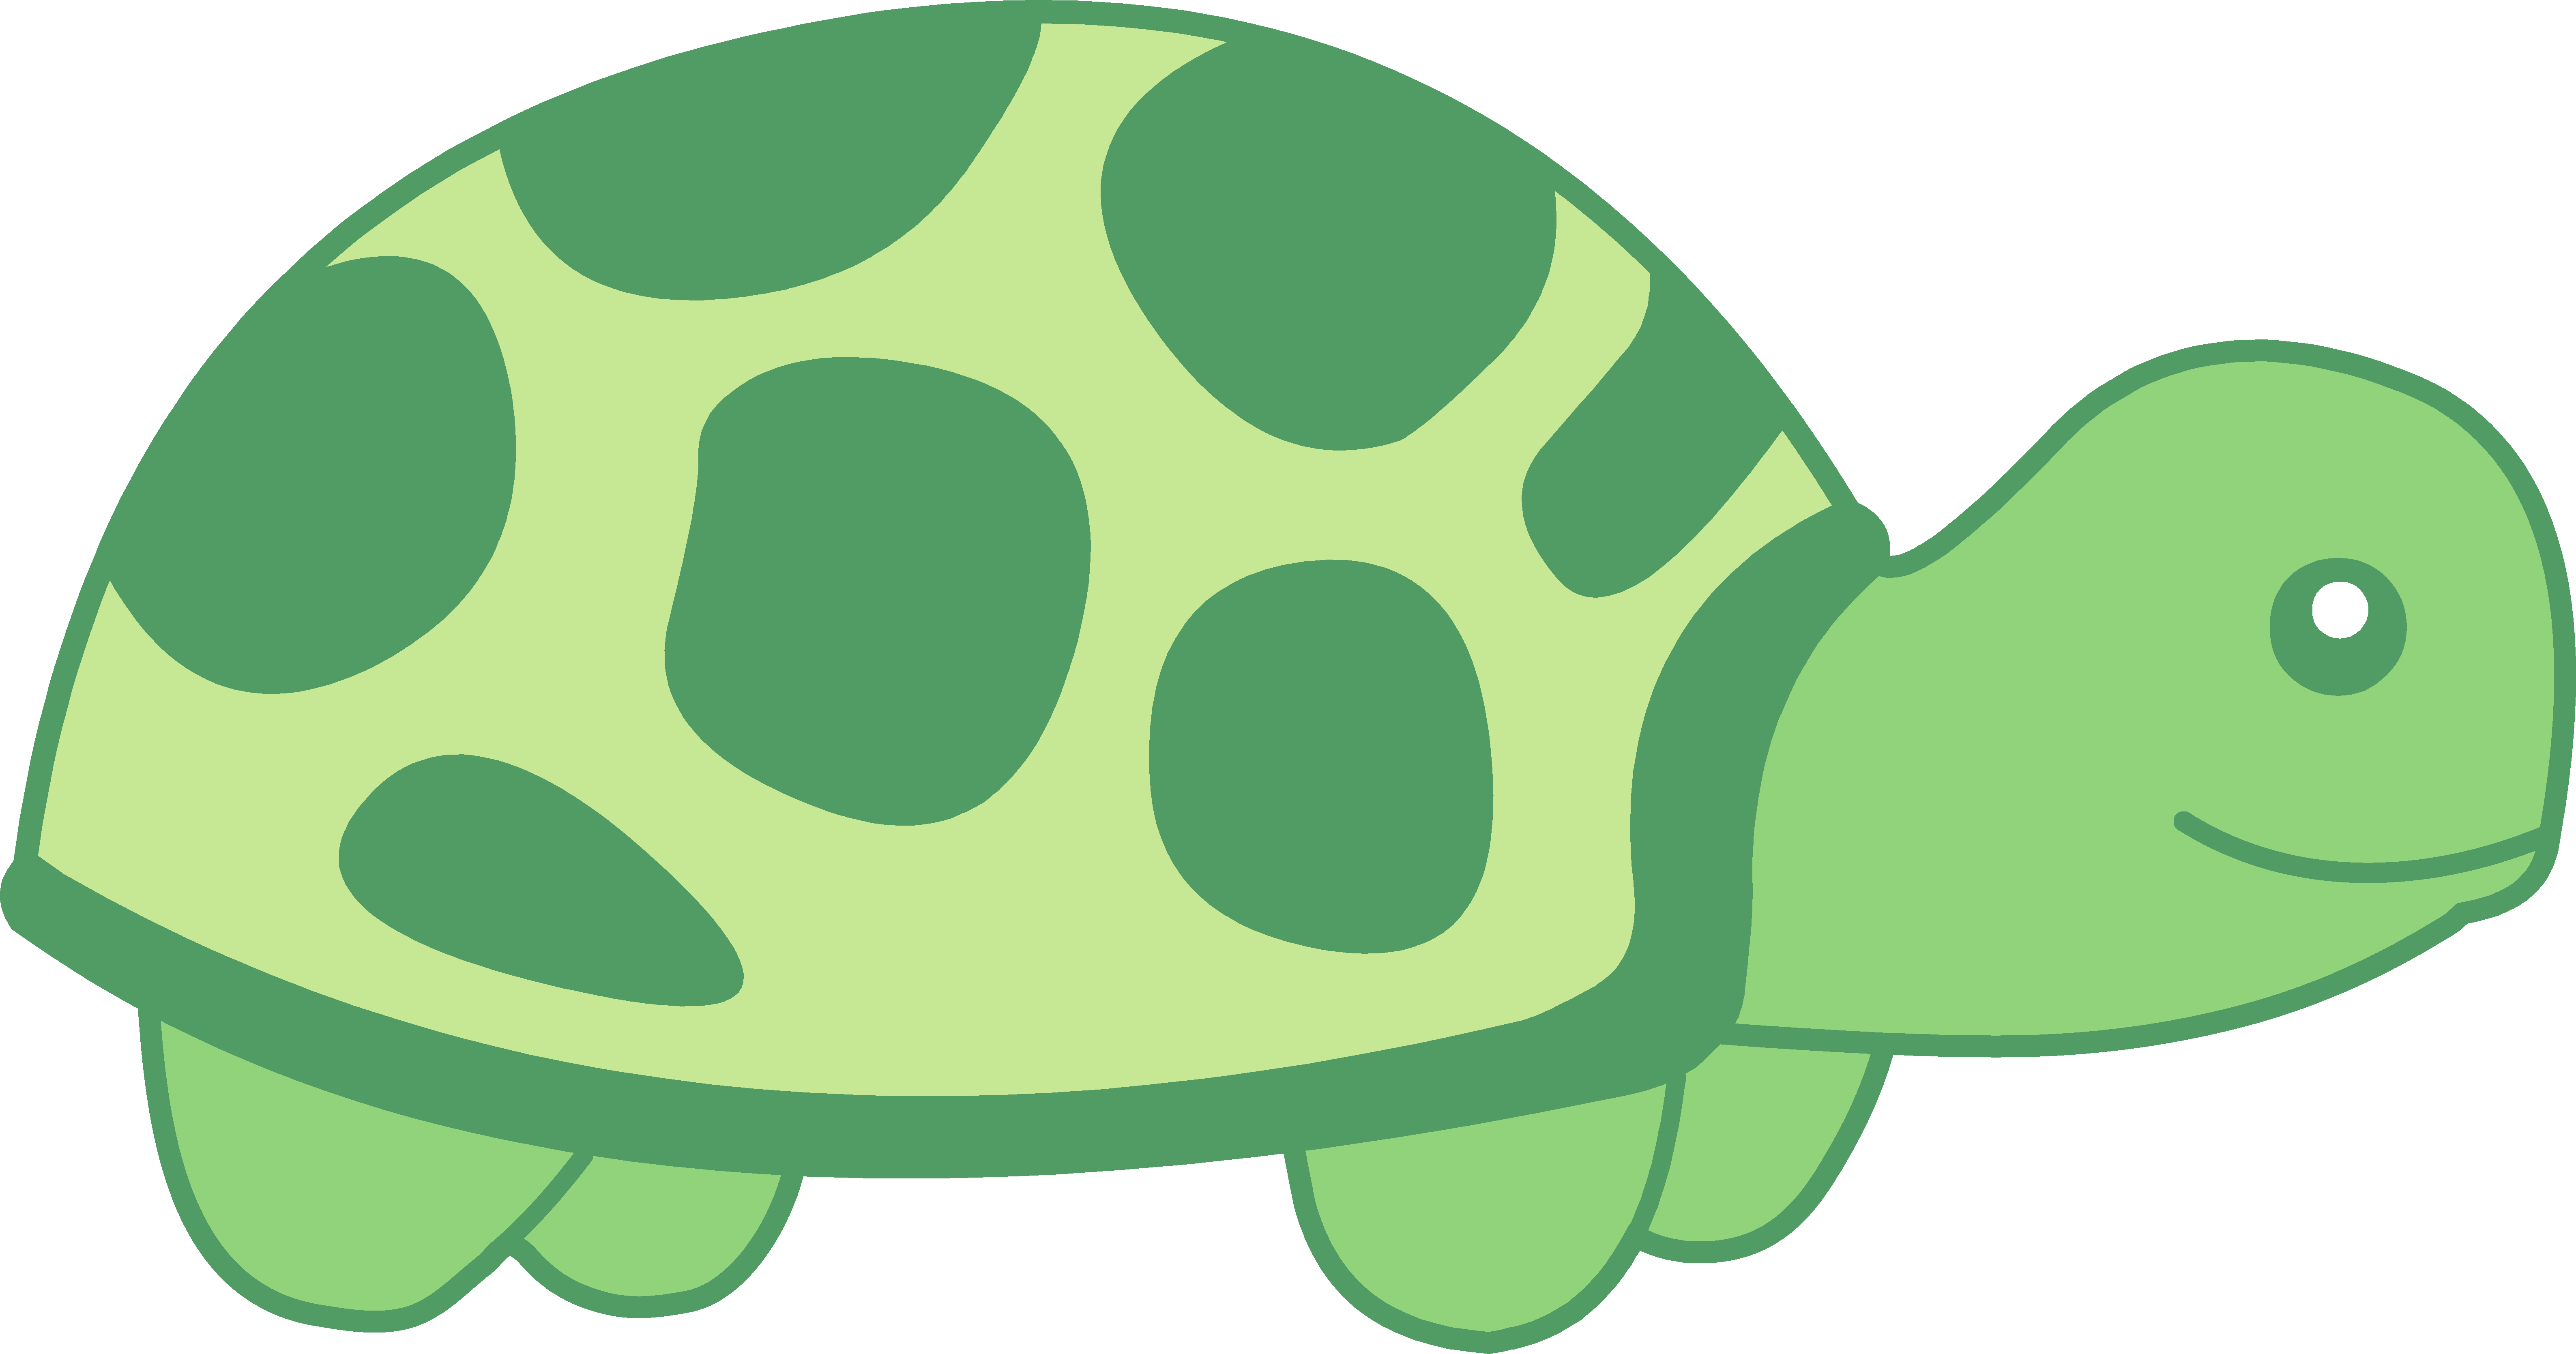 Little green design free. Clipart turtle geometric